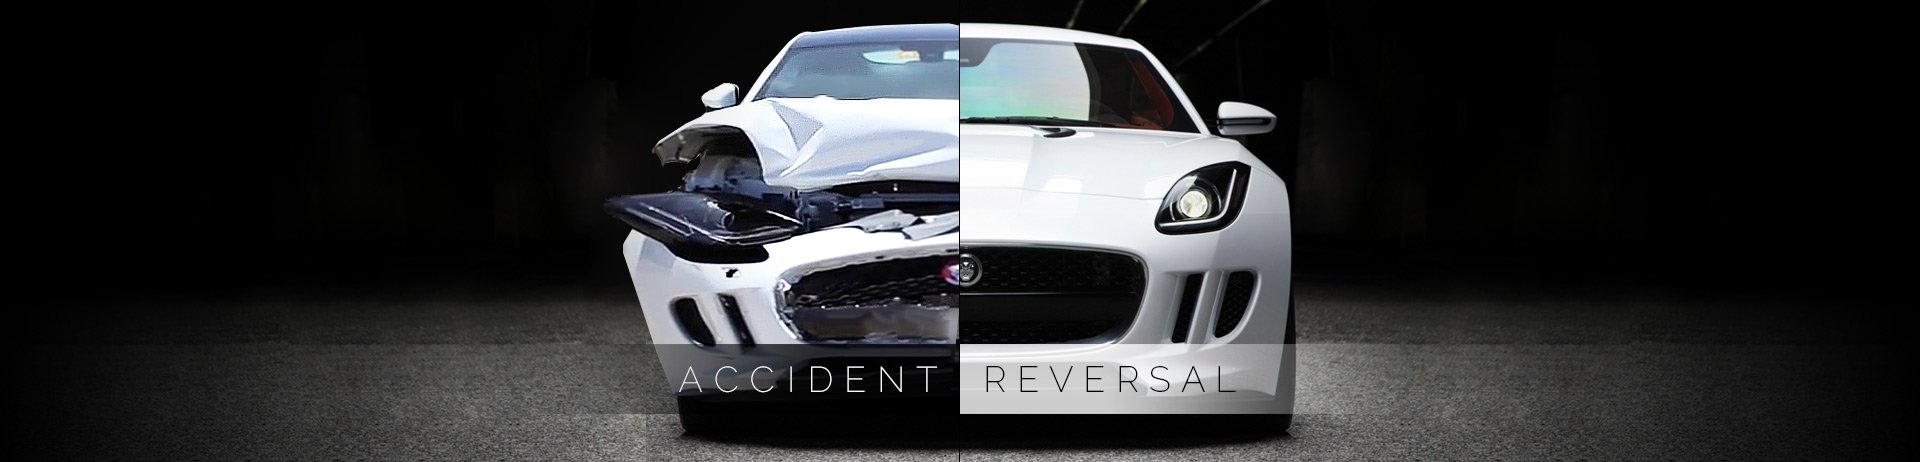 Accident Reversal | Manuel Collision Center